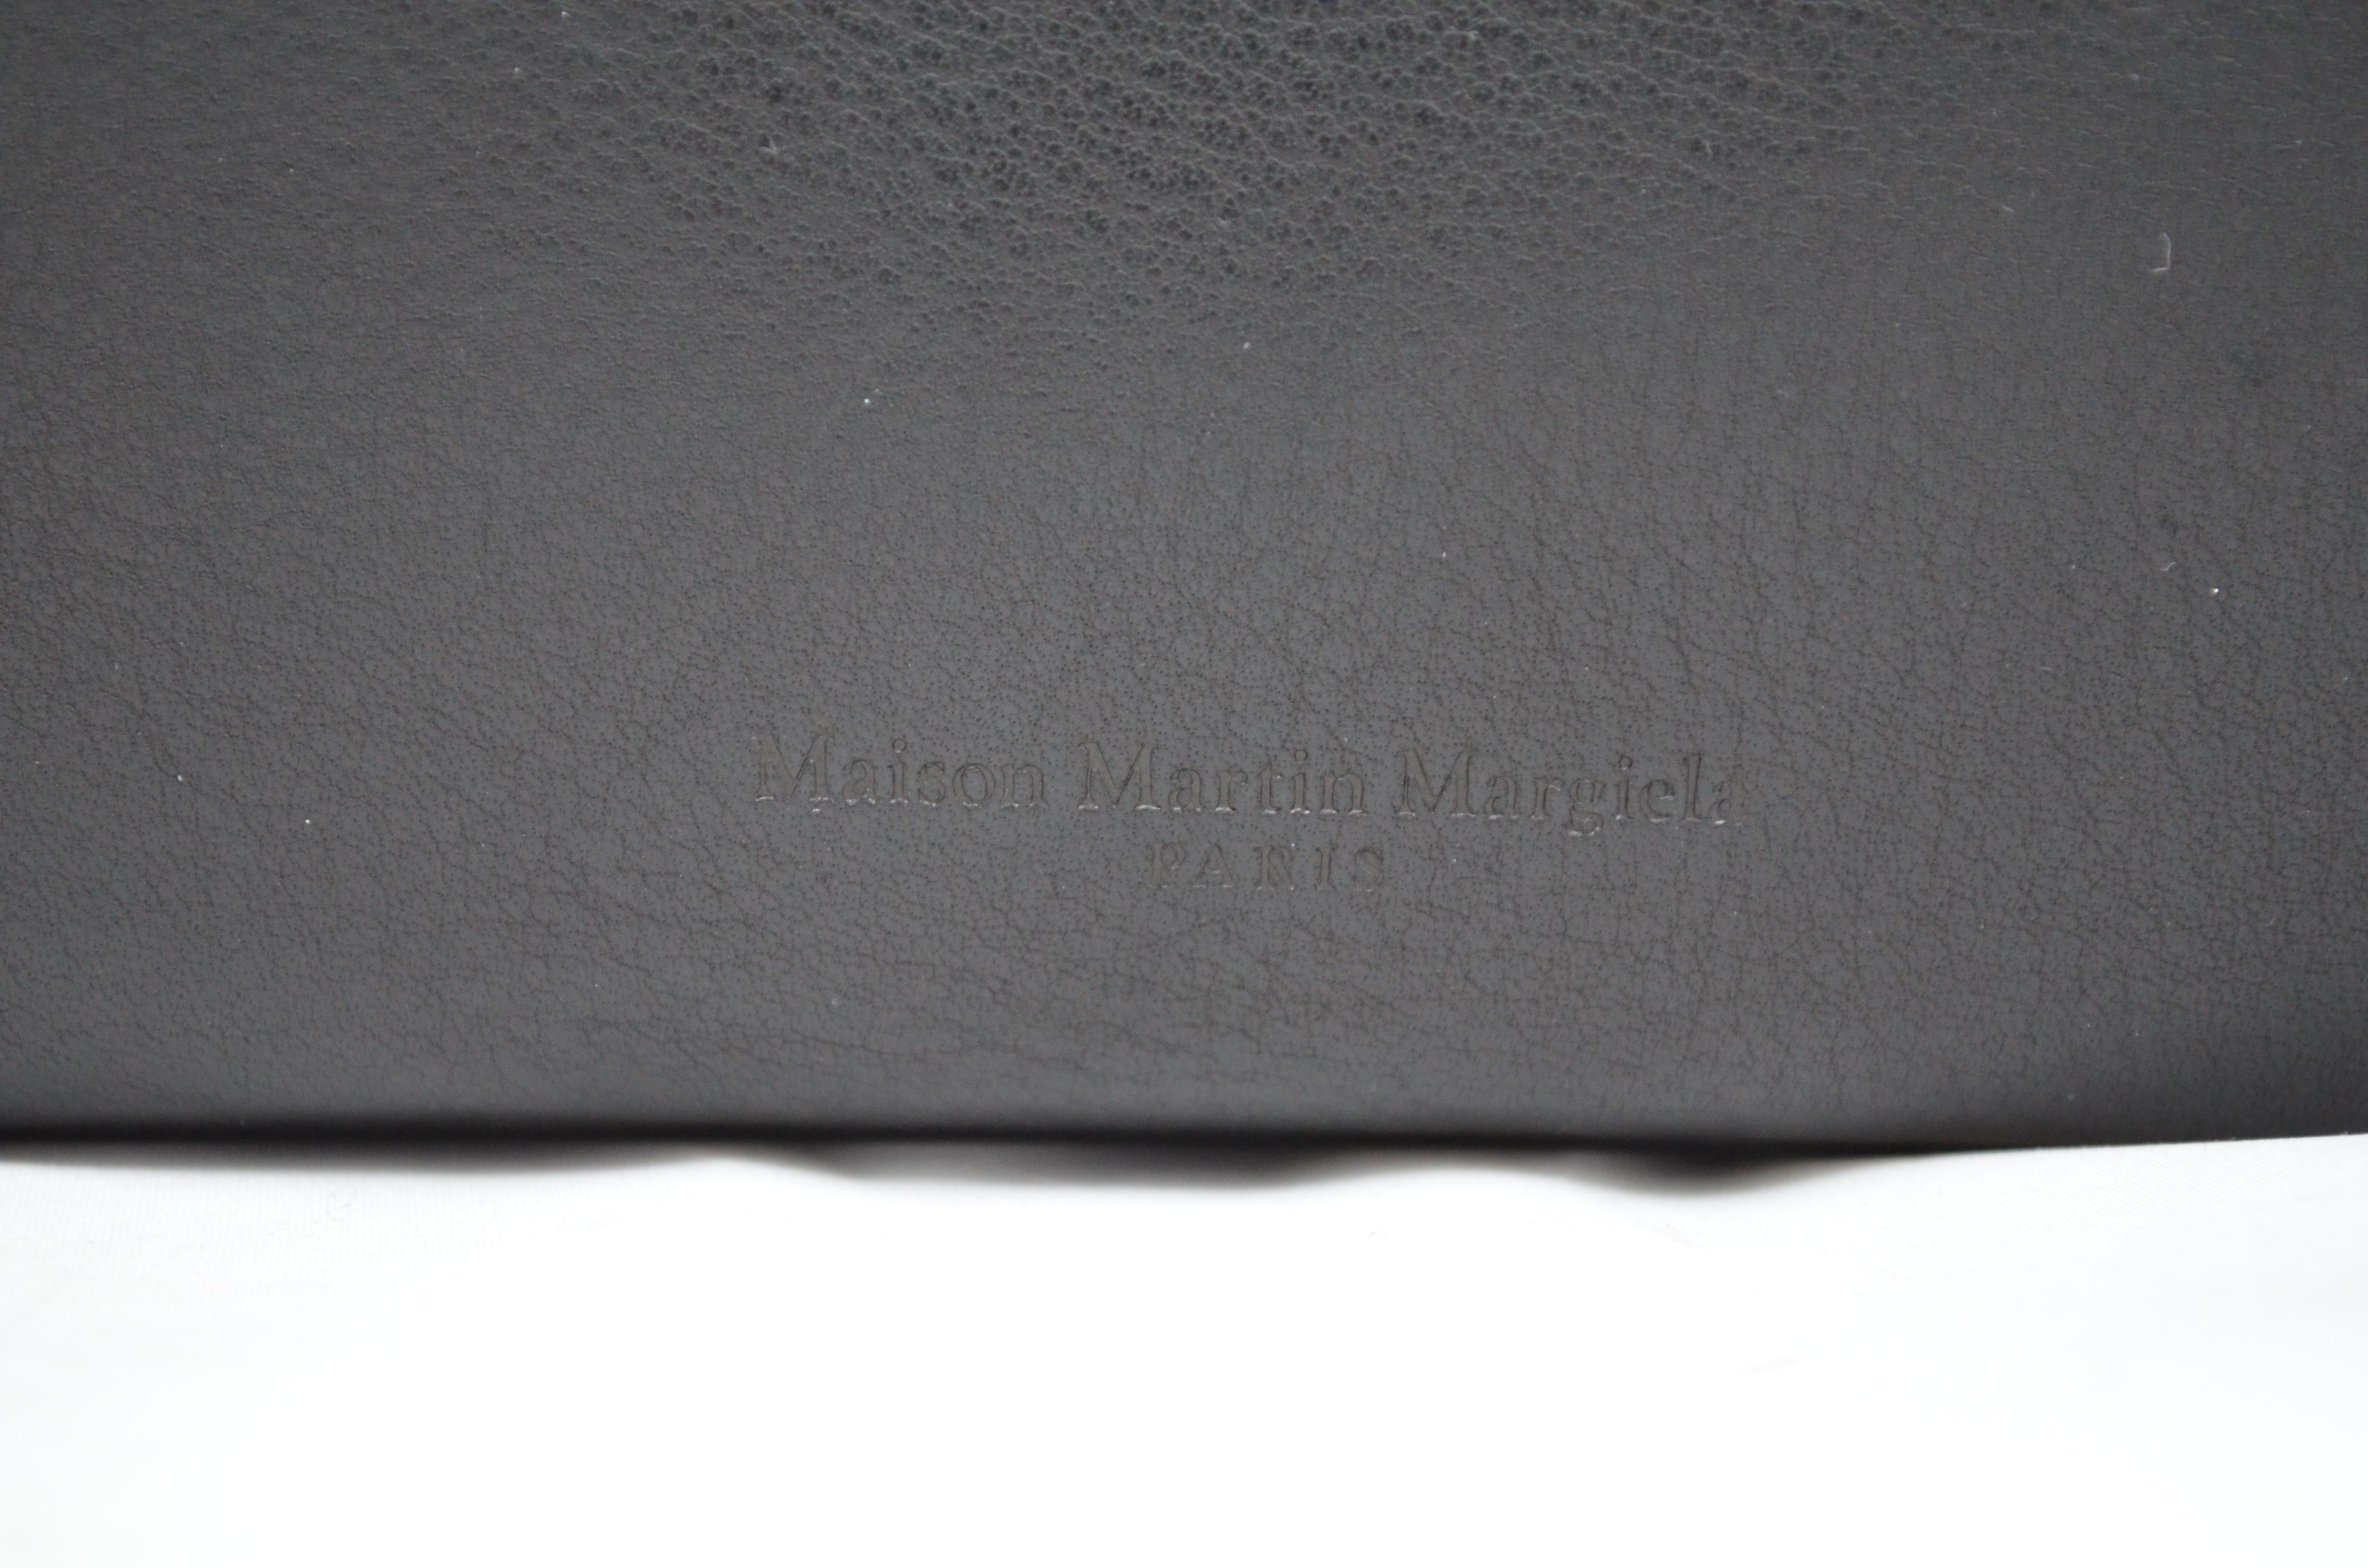 Maison Martin Margiela Calf Leather Clutch with Strap 1